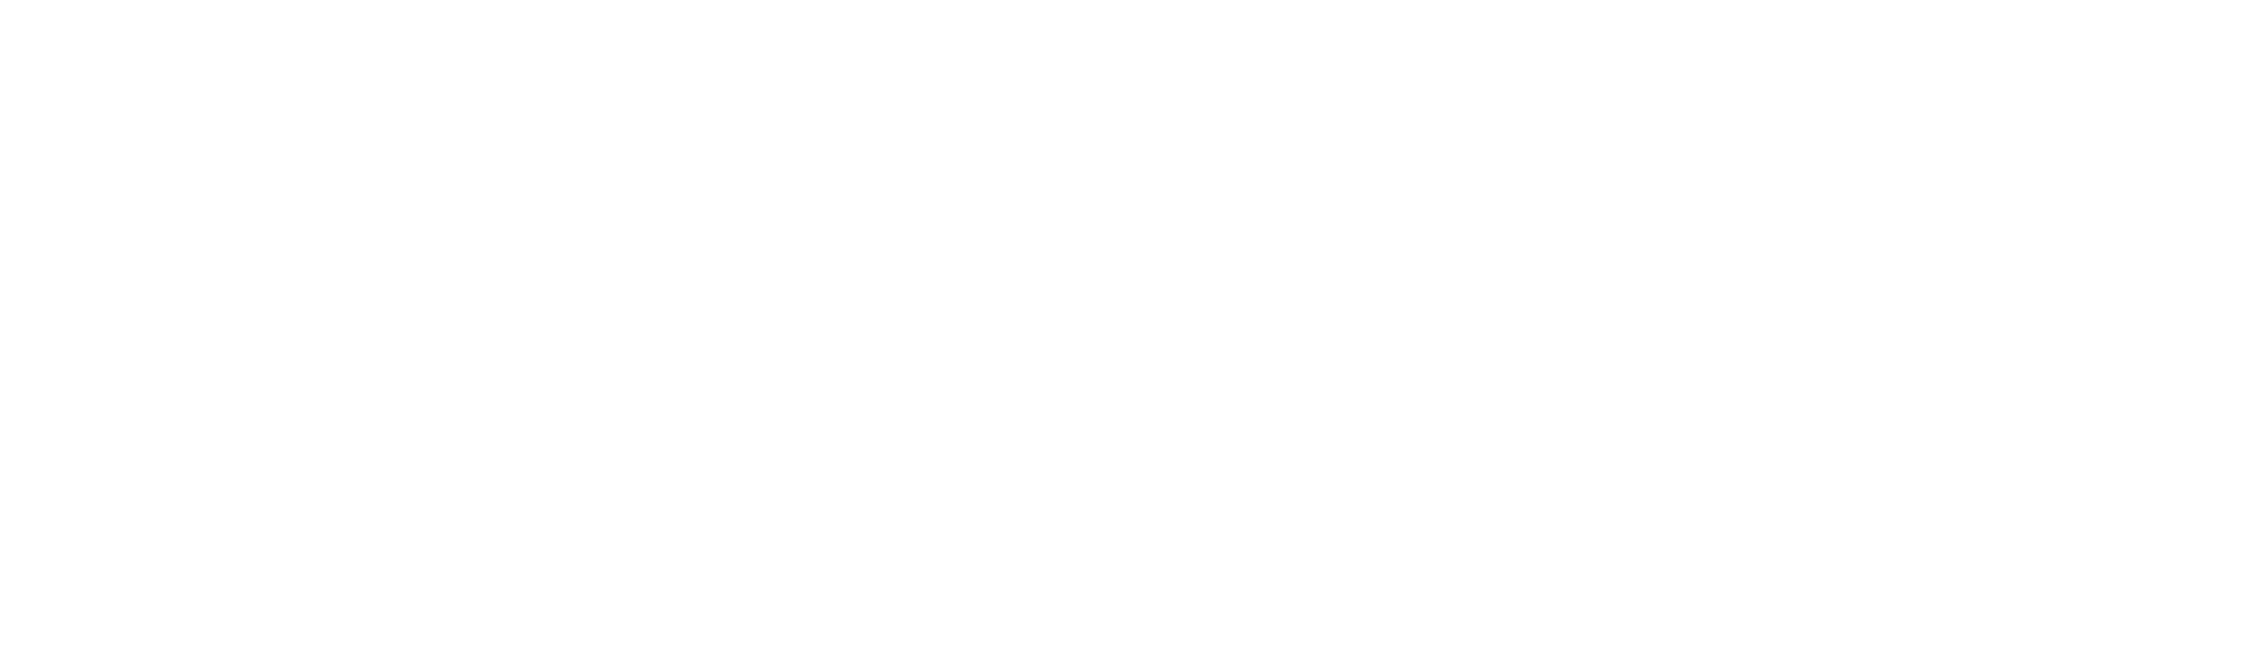 Logo Lucizoo agrizoopet